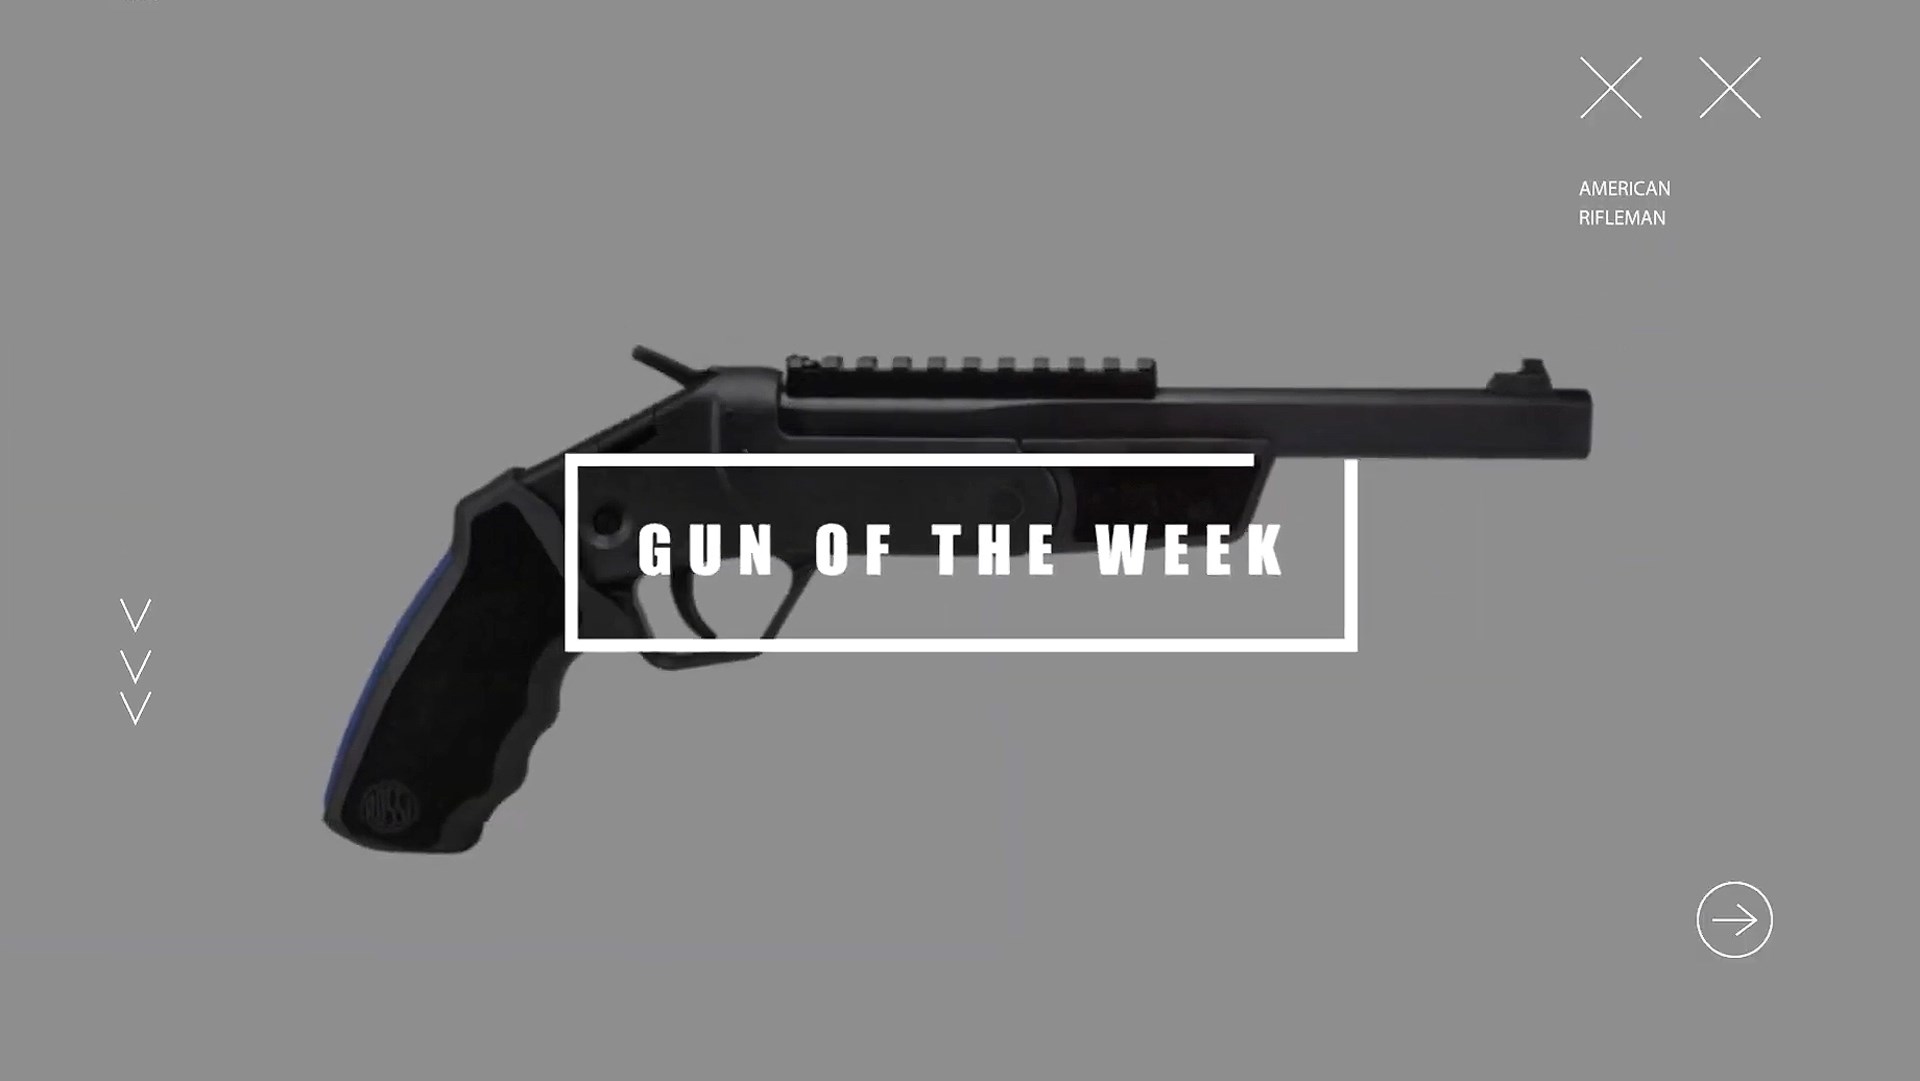 GUN OF THE WEEK text box overlay handgun rossi brawler black metal gun right-side view AMERICAN RIFLEMAN XX ARROWS on image